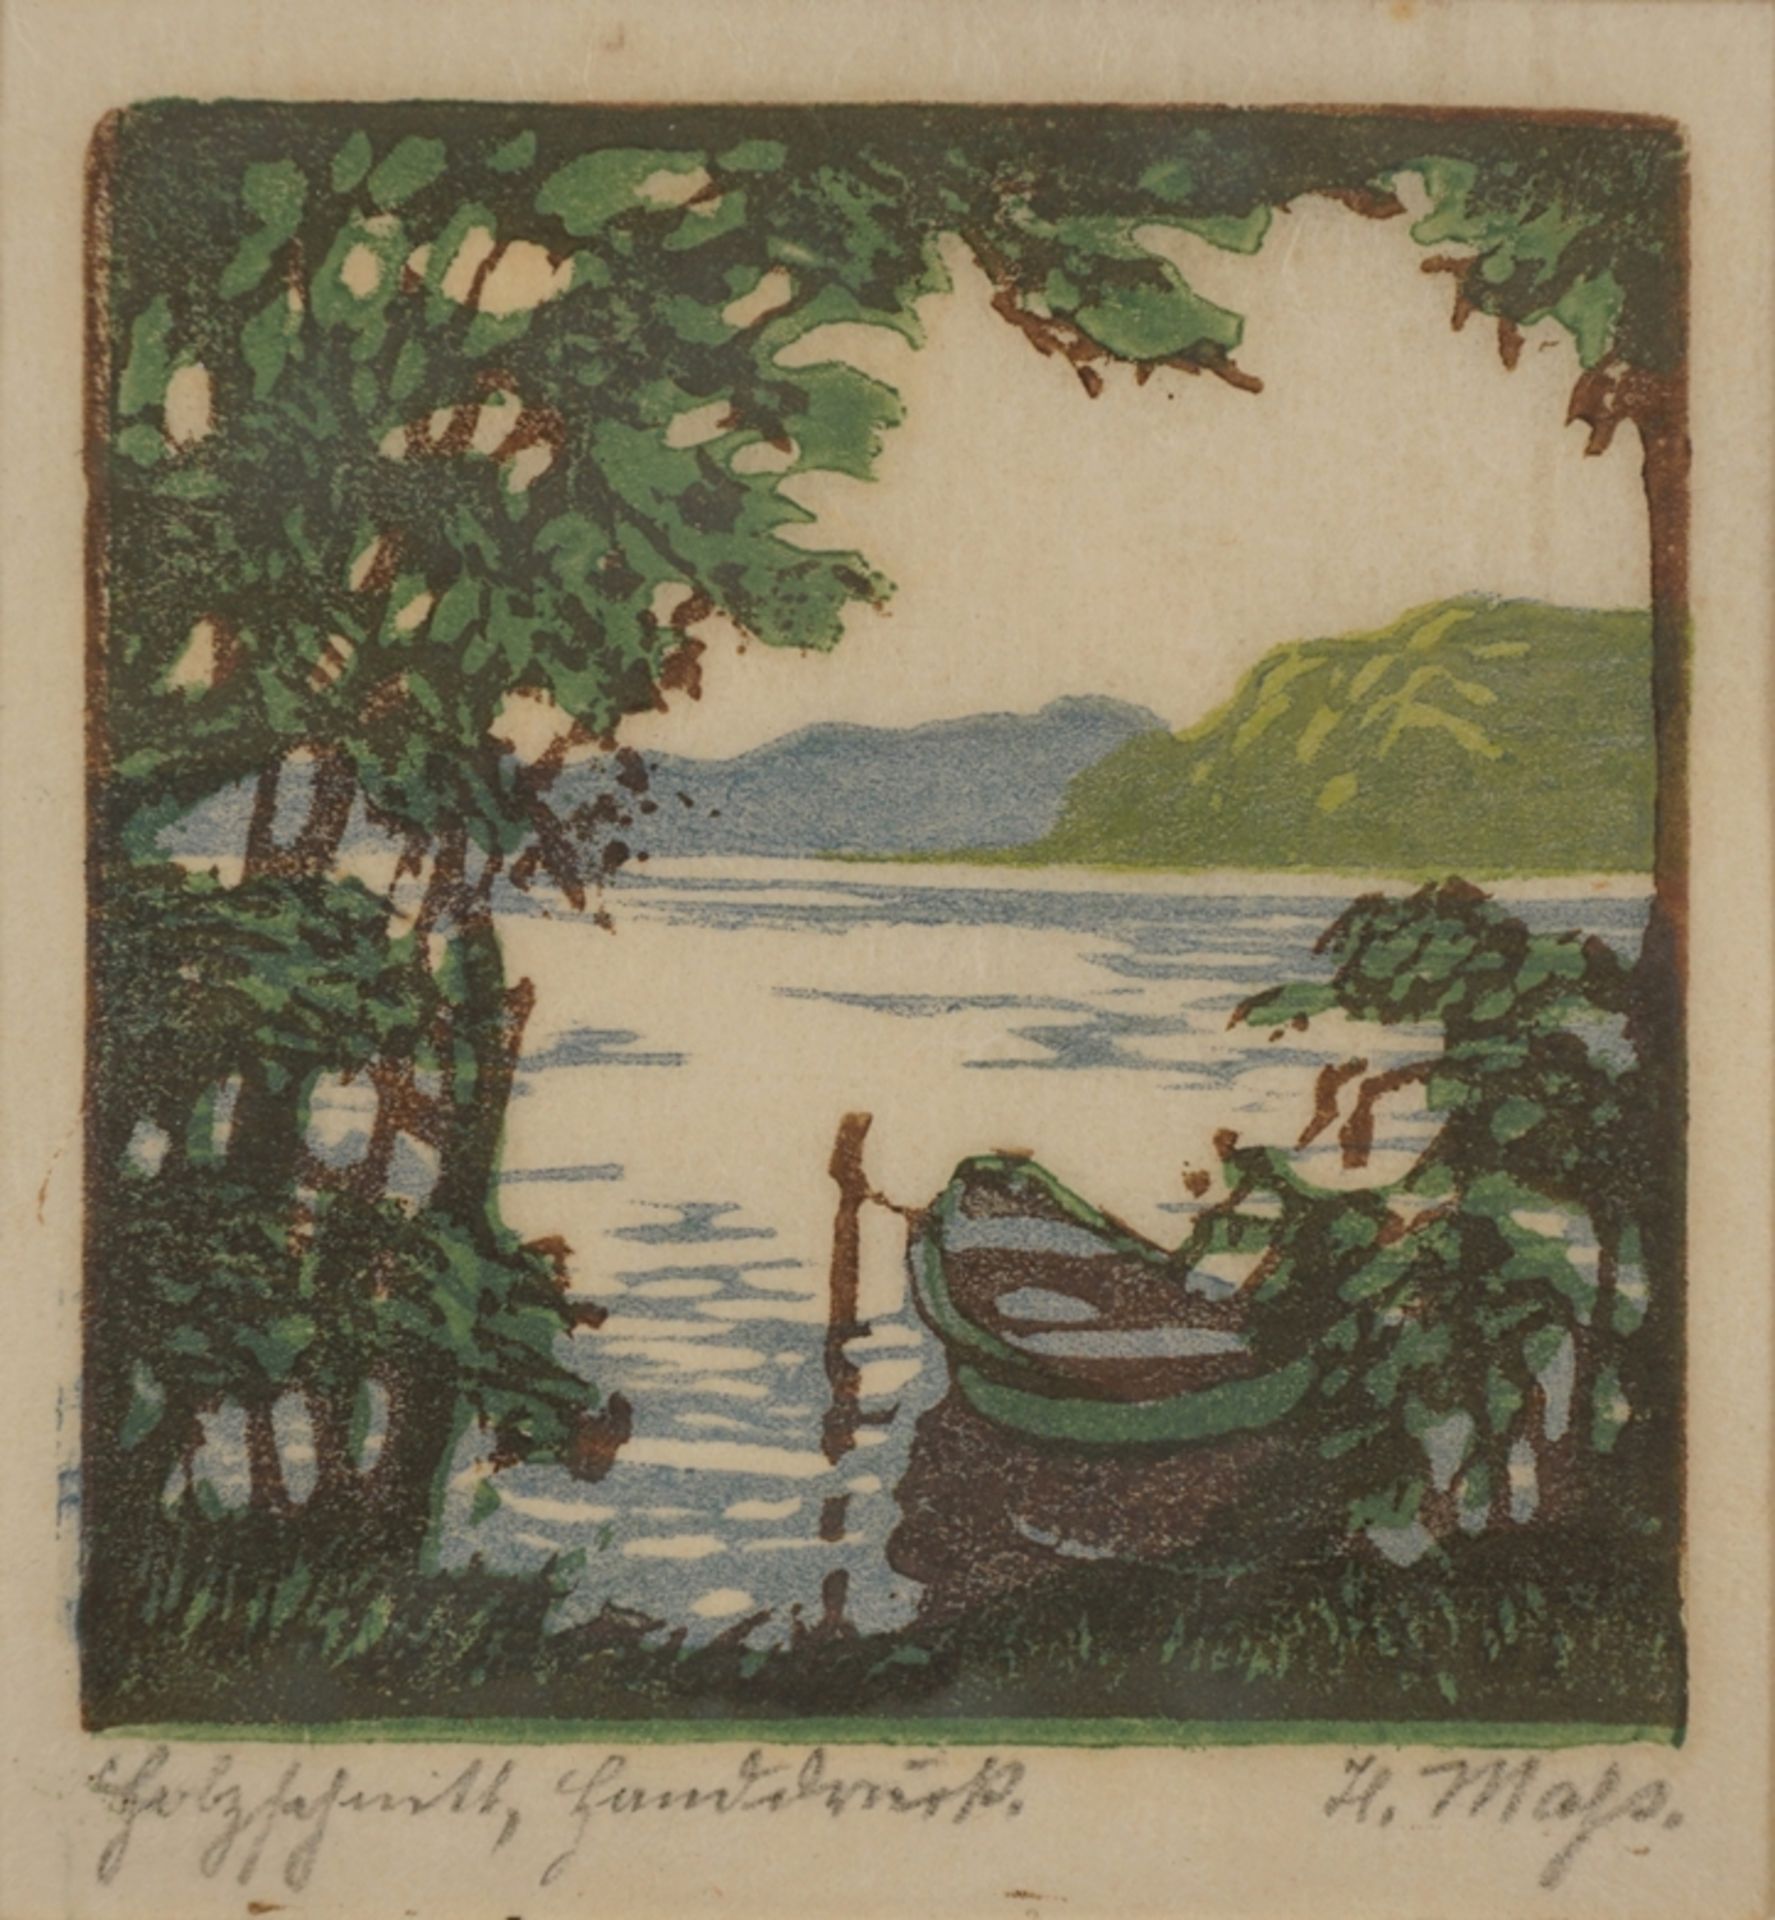 Helene Maß (1871, Schönlanke - 1955, Berlin), "Anlegestelle mit Boot", Farbholzschnitt